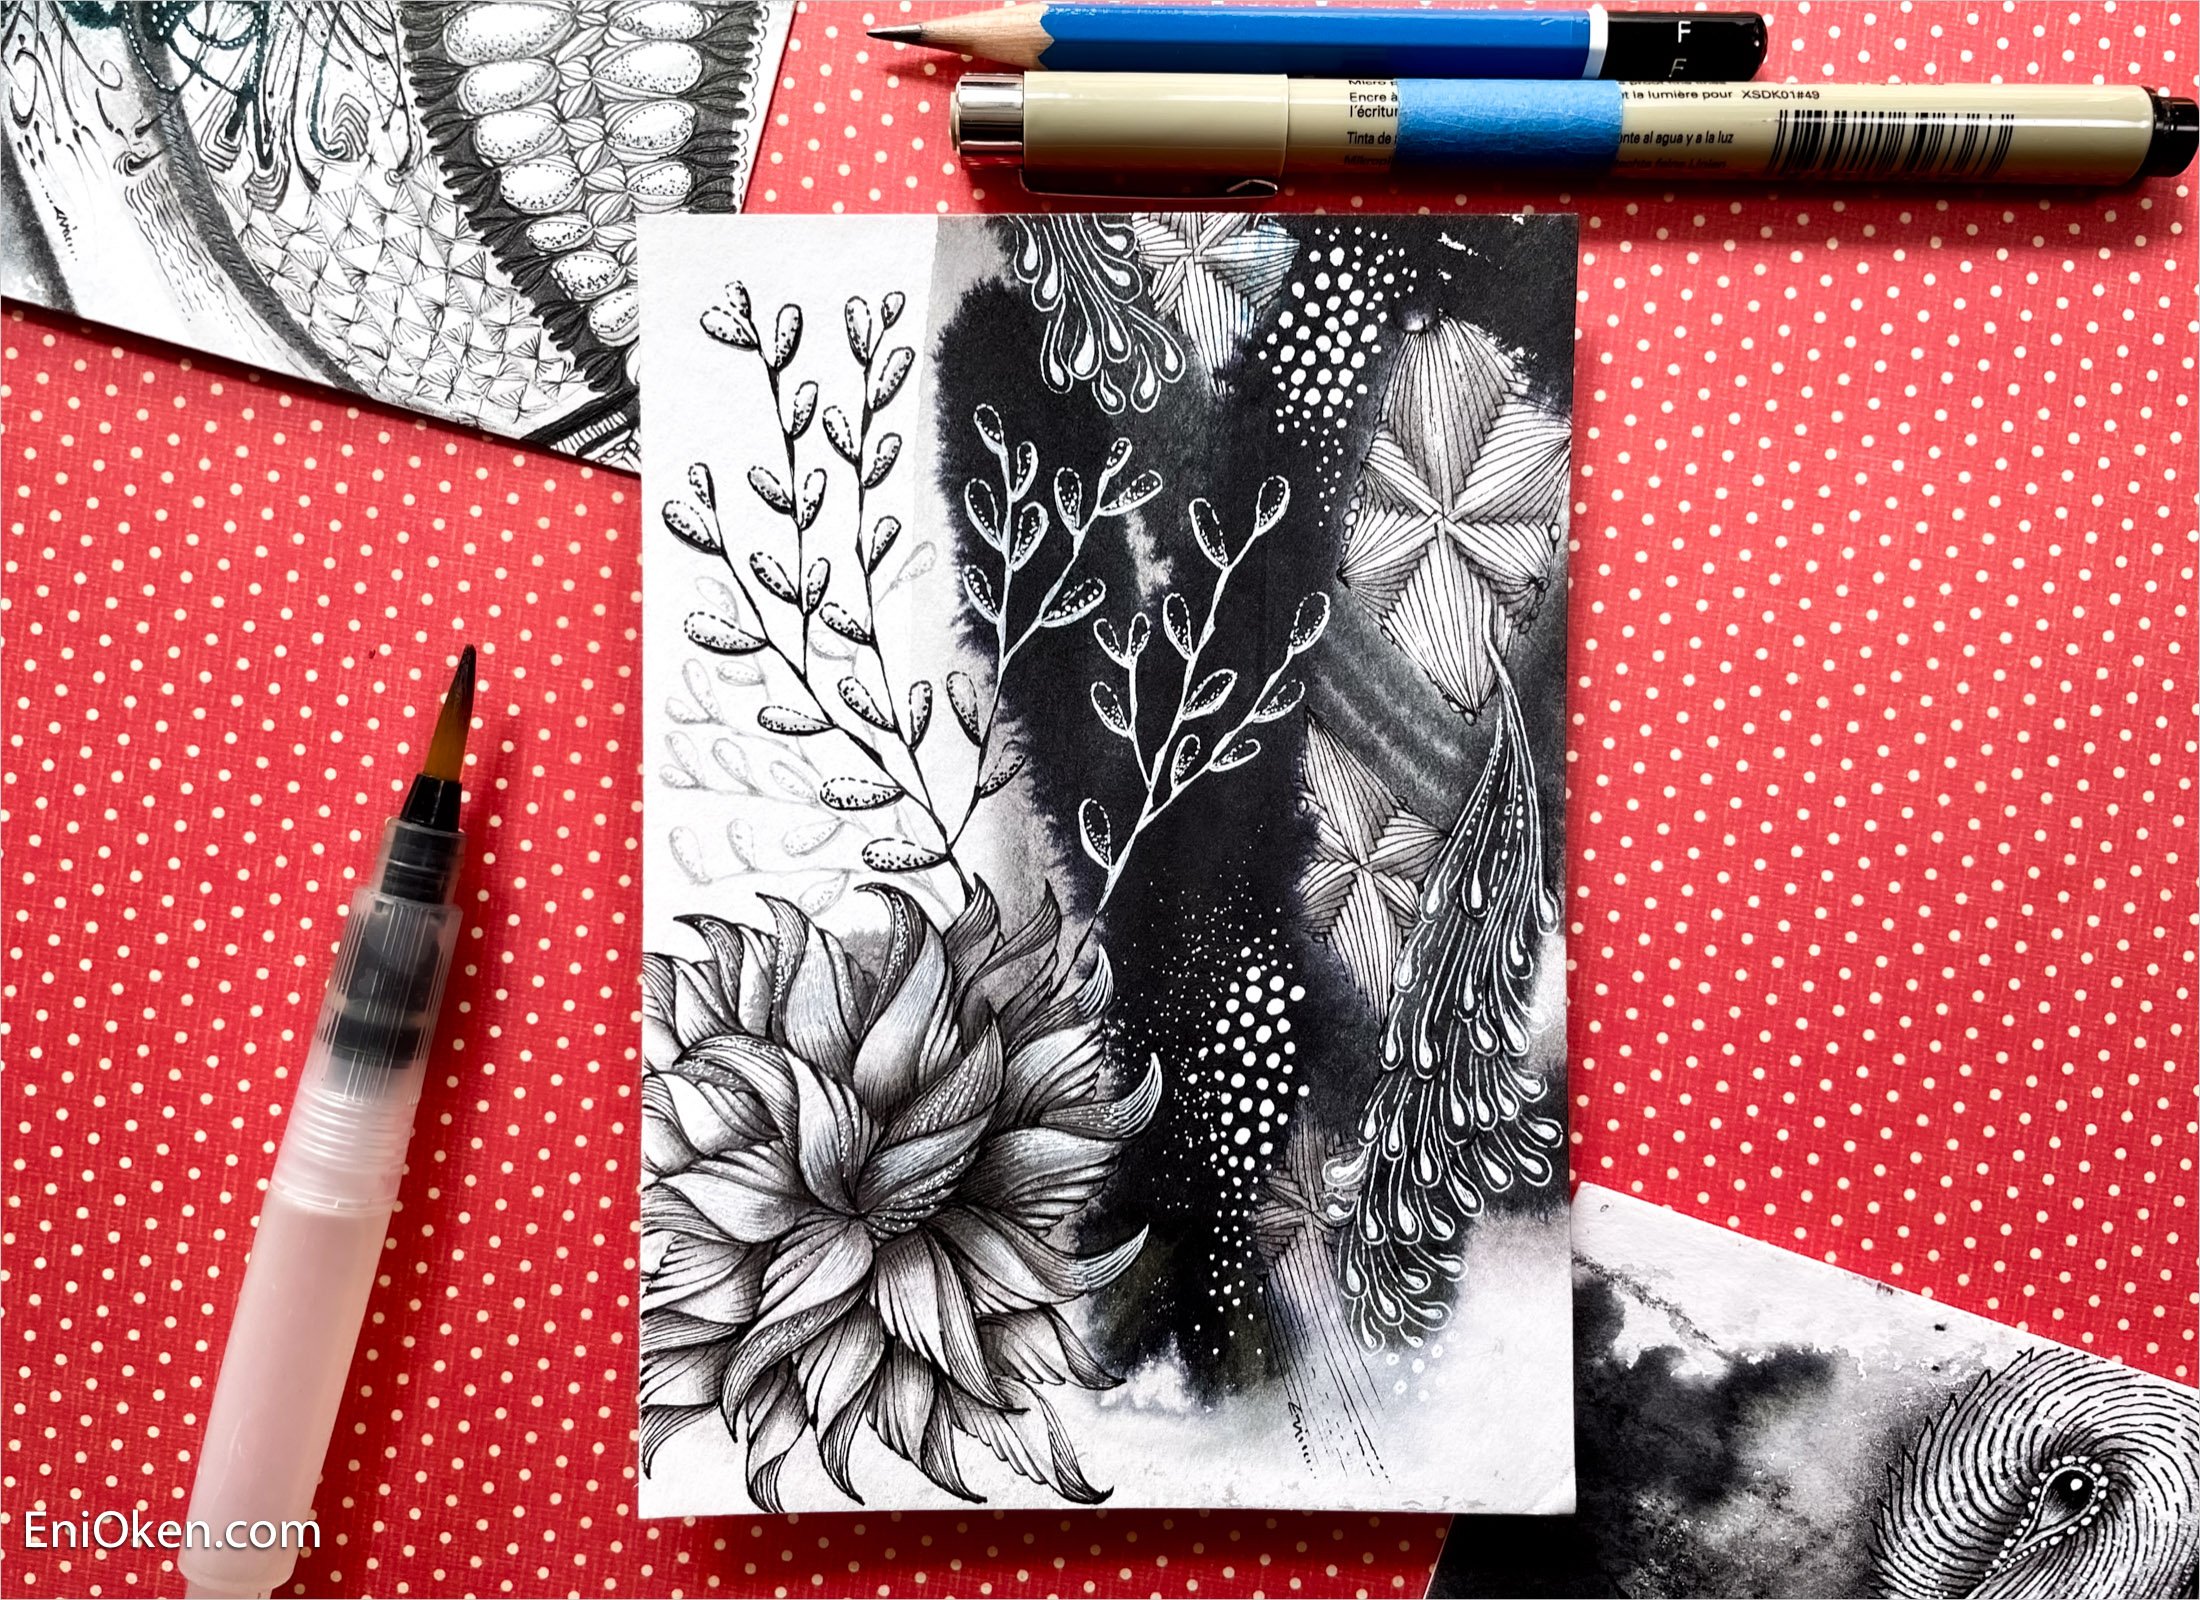 Shading with Black Pencils - no smudge! — Eni Oken